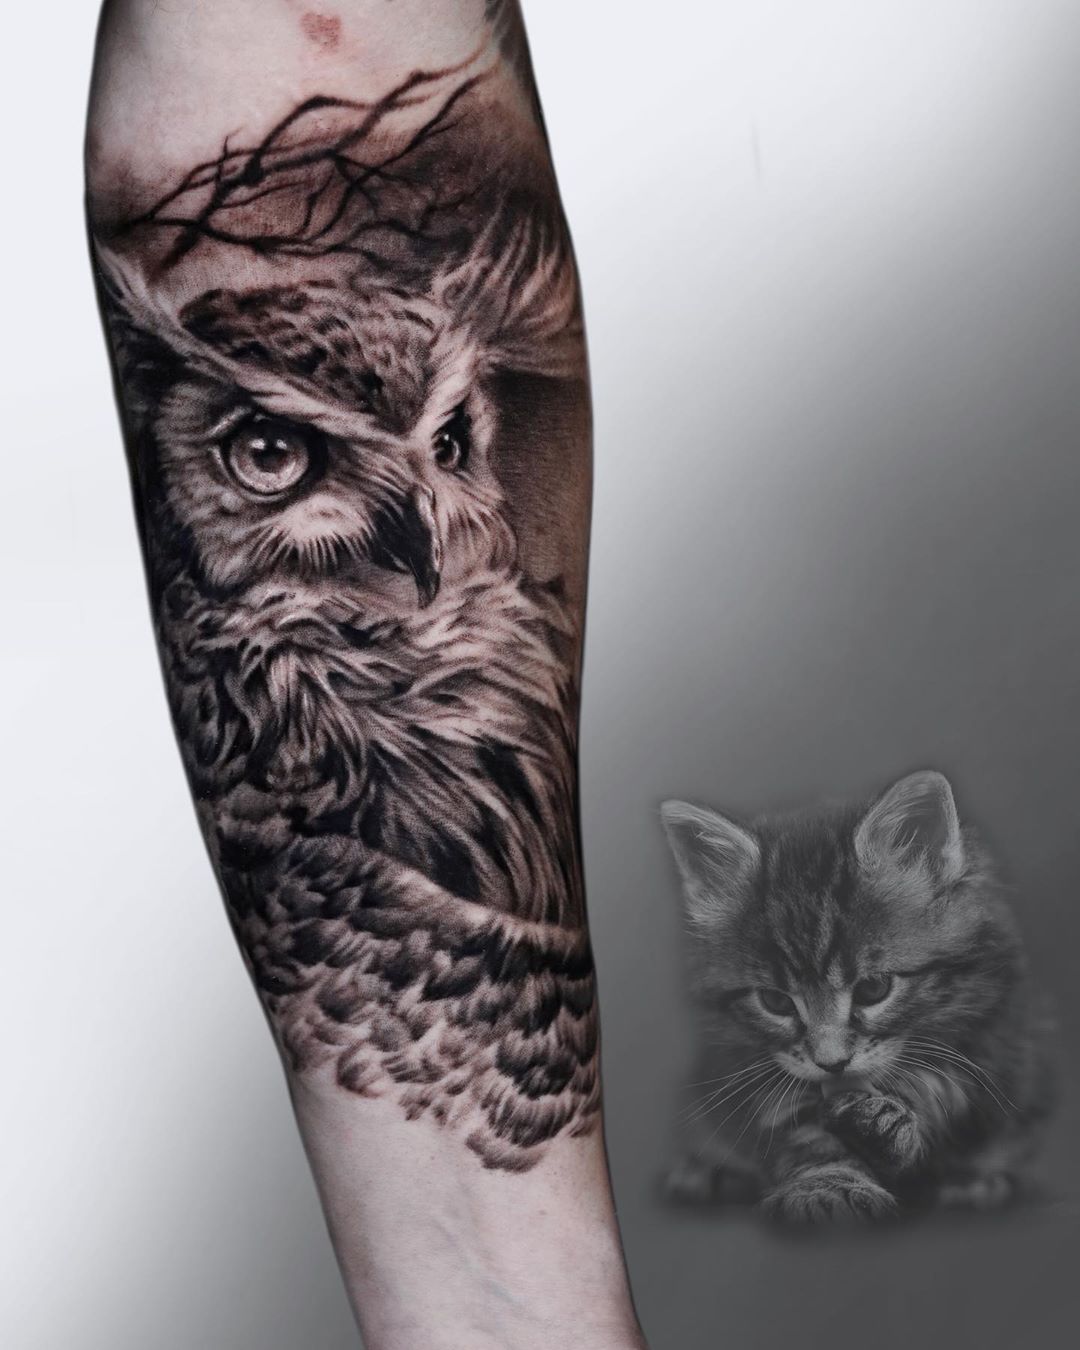 Impressive examples of owl tattoo for men